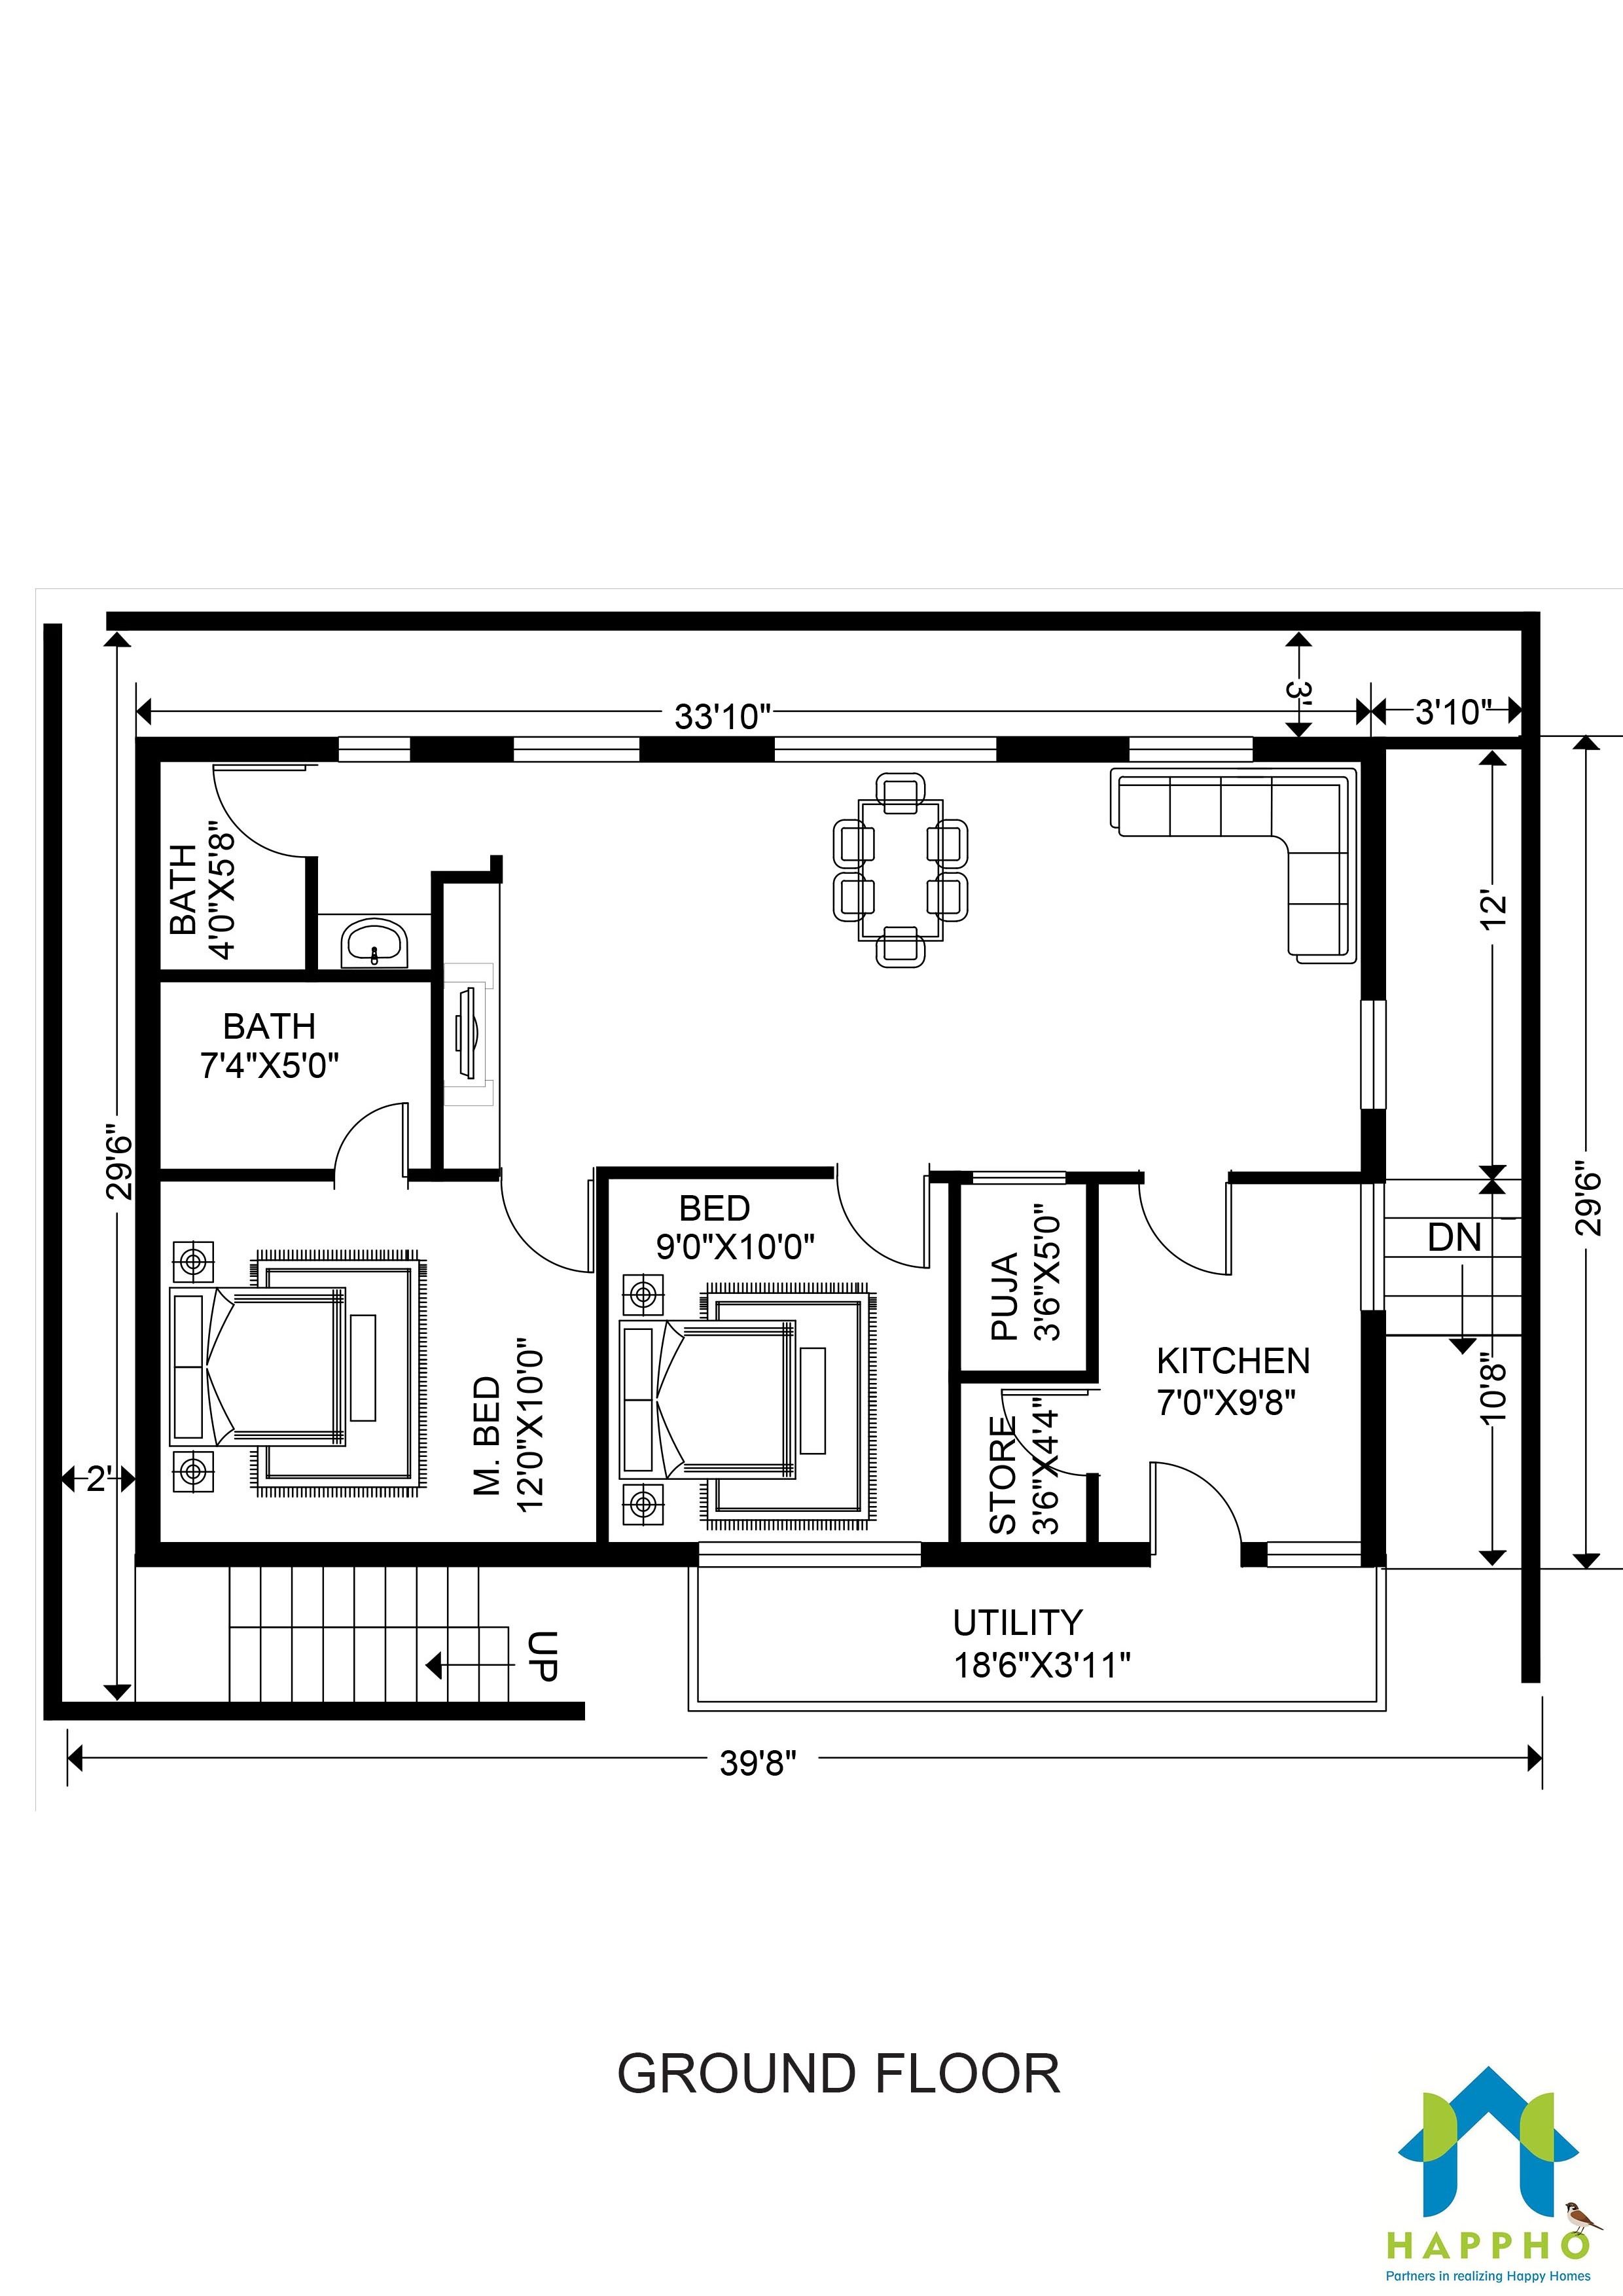 Floor Plan for 30 X 40 Feet Plot 2BHK (1200 Square Feet